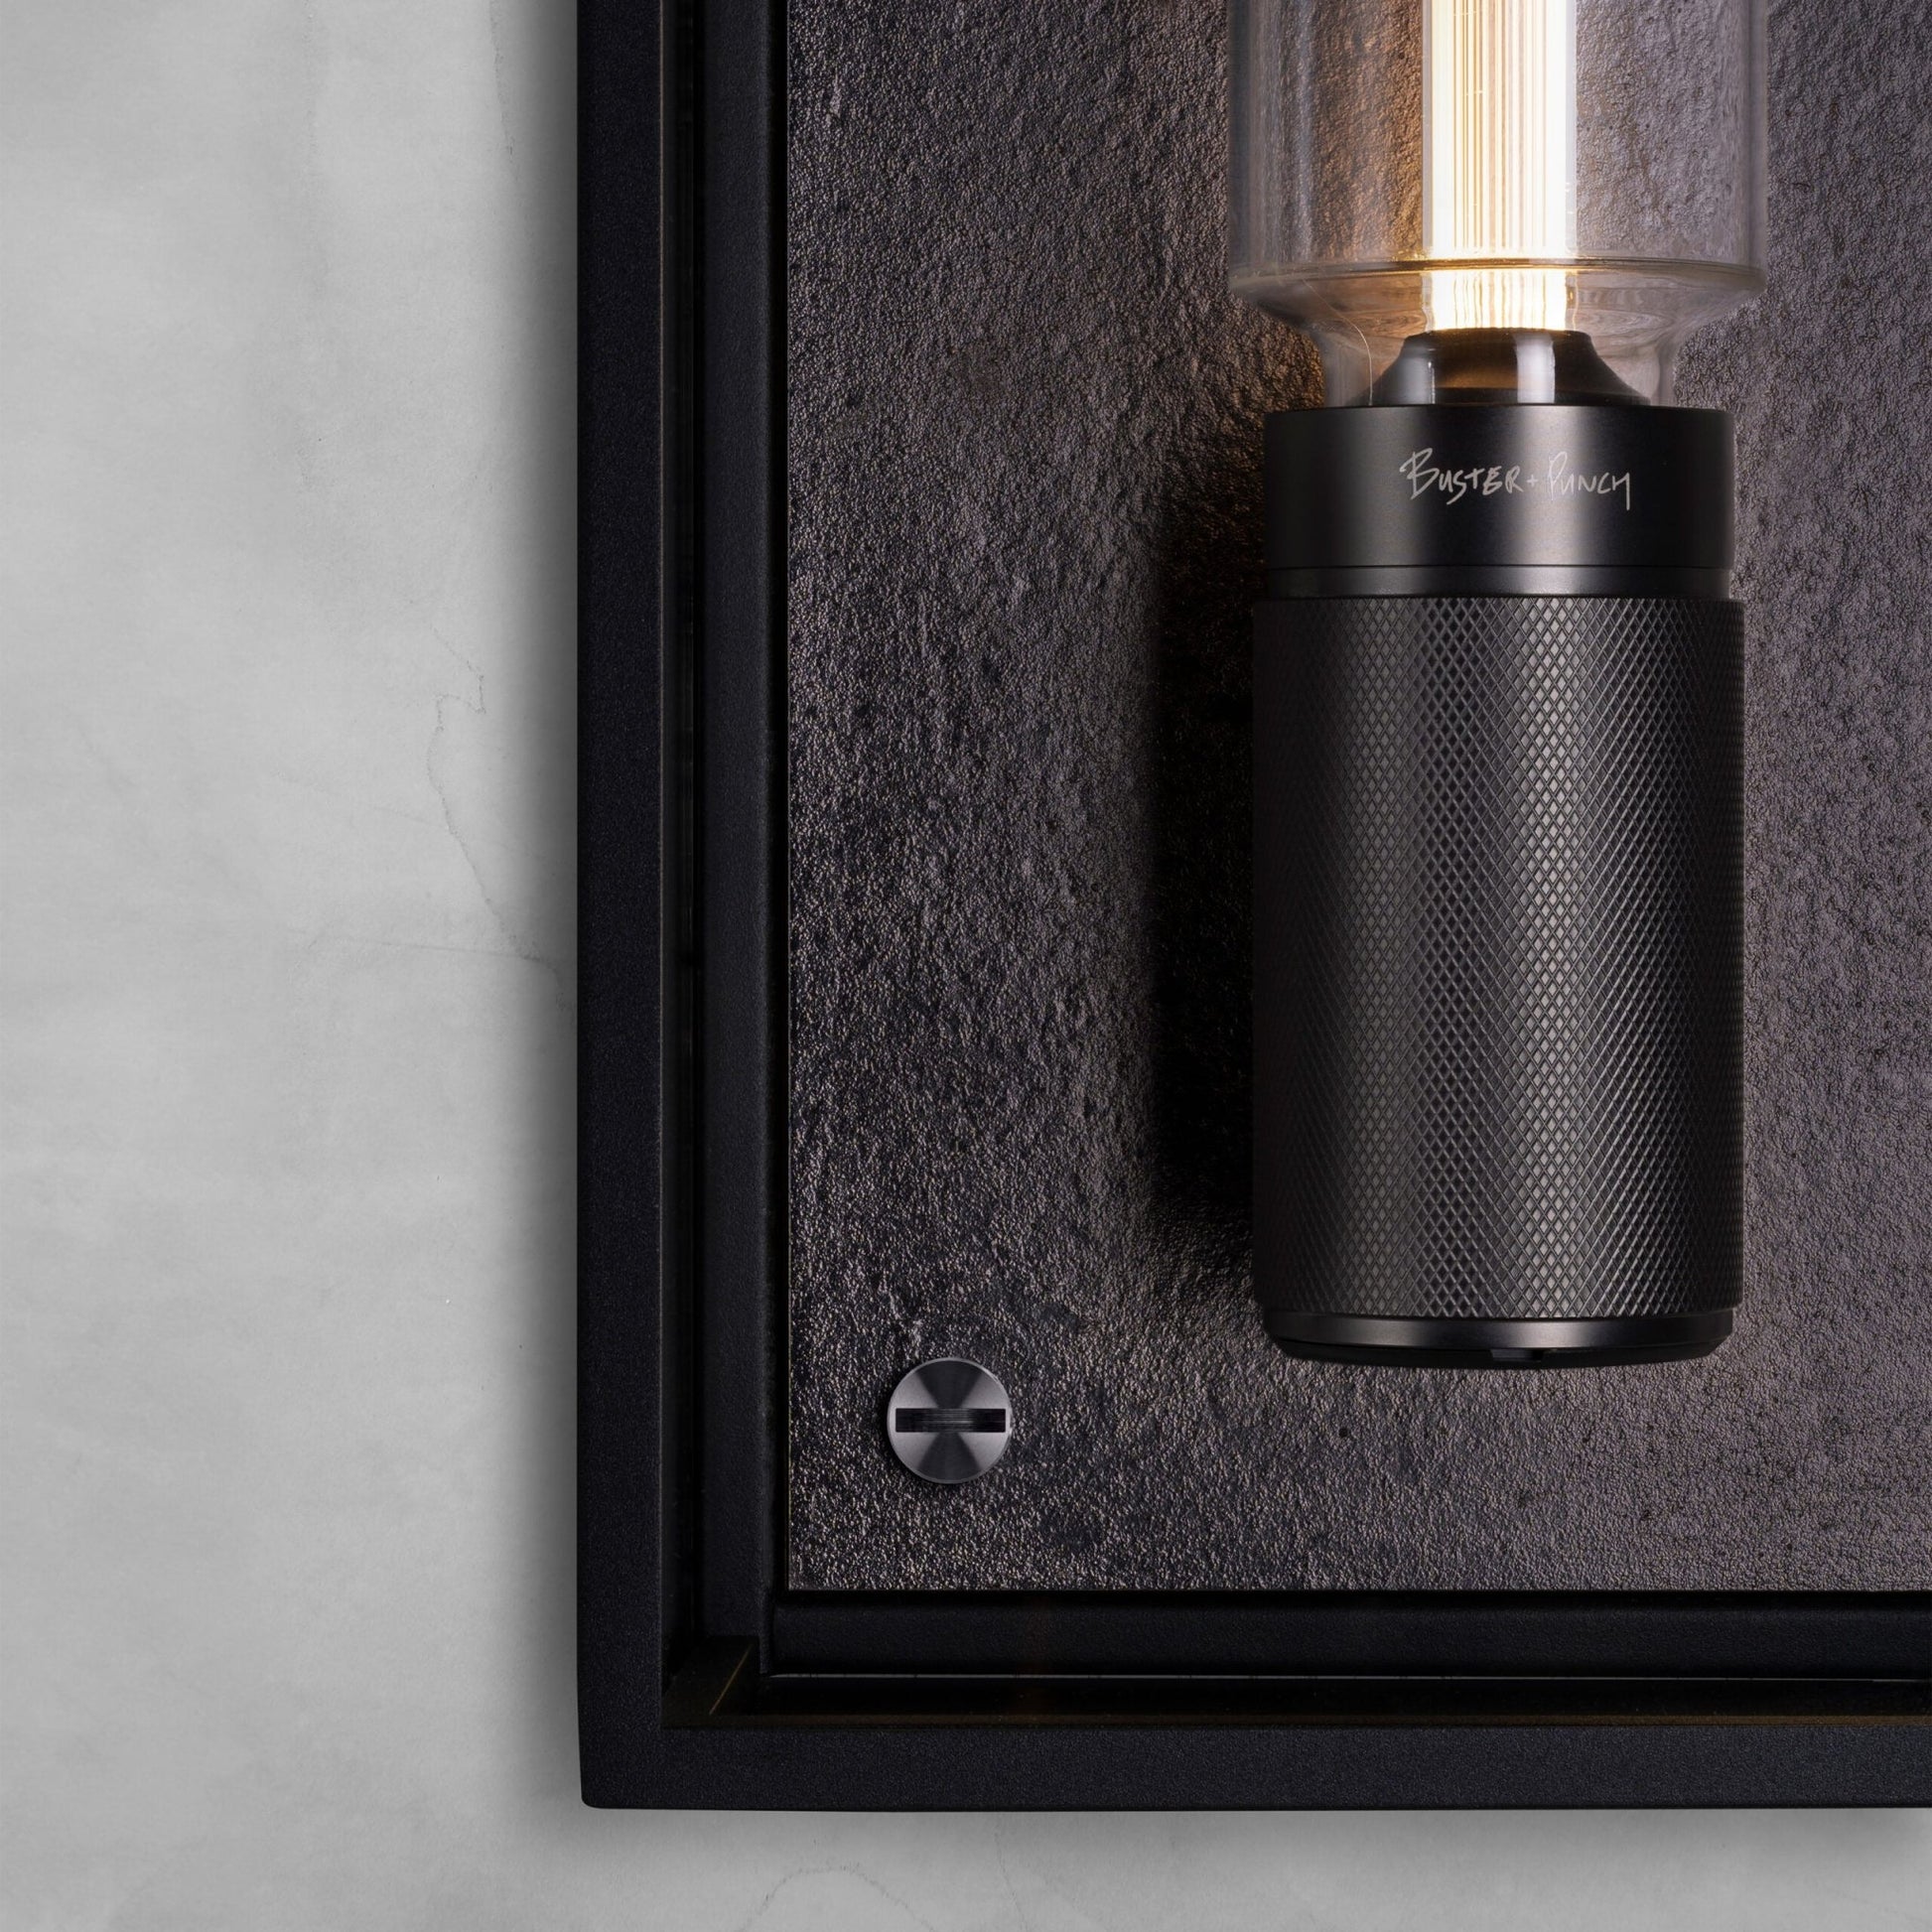 Industrial Caged Wall Bathroom Light in Gun Metal - |VESIMI Design|